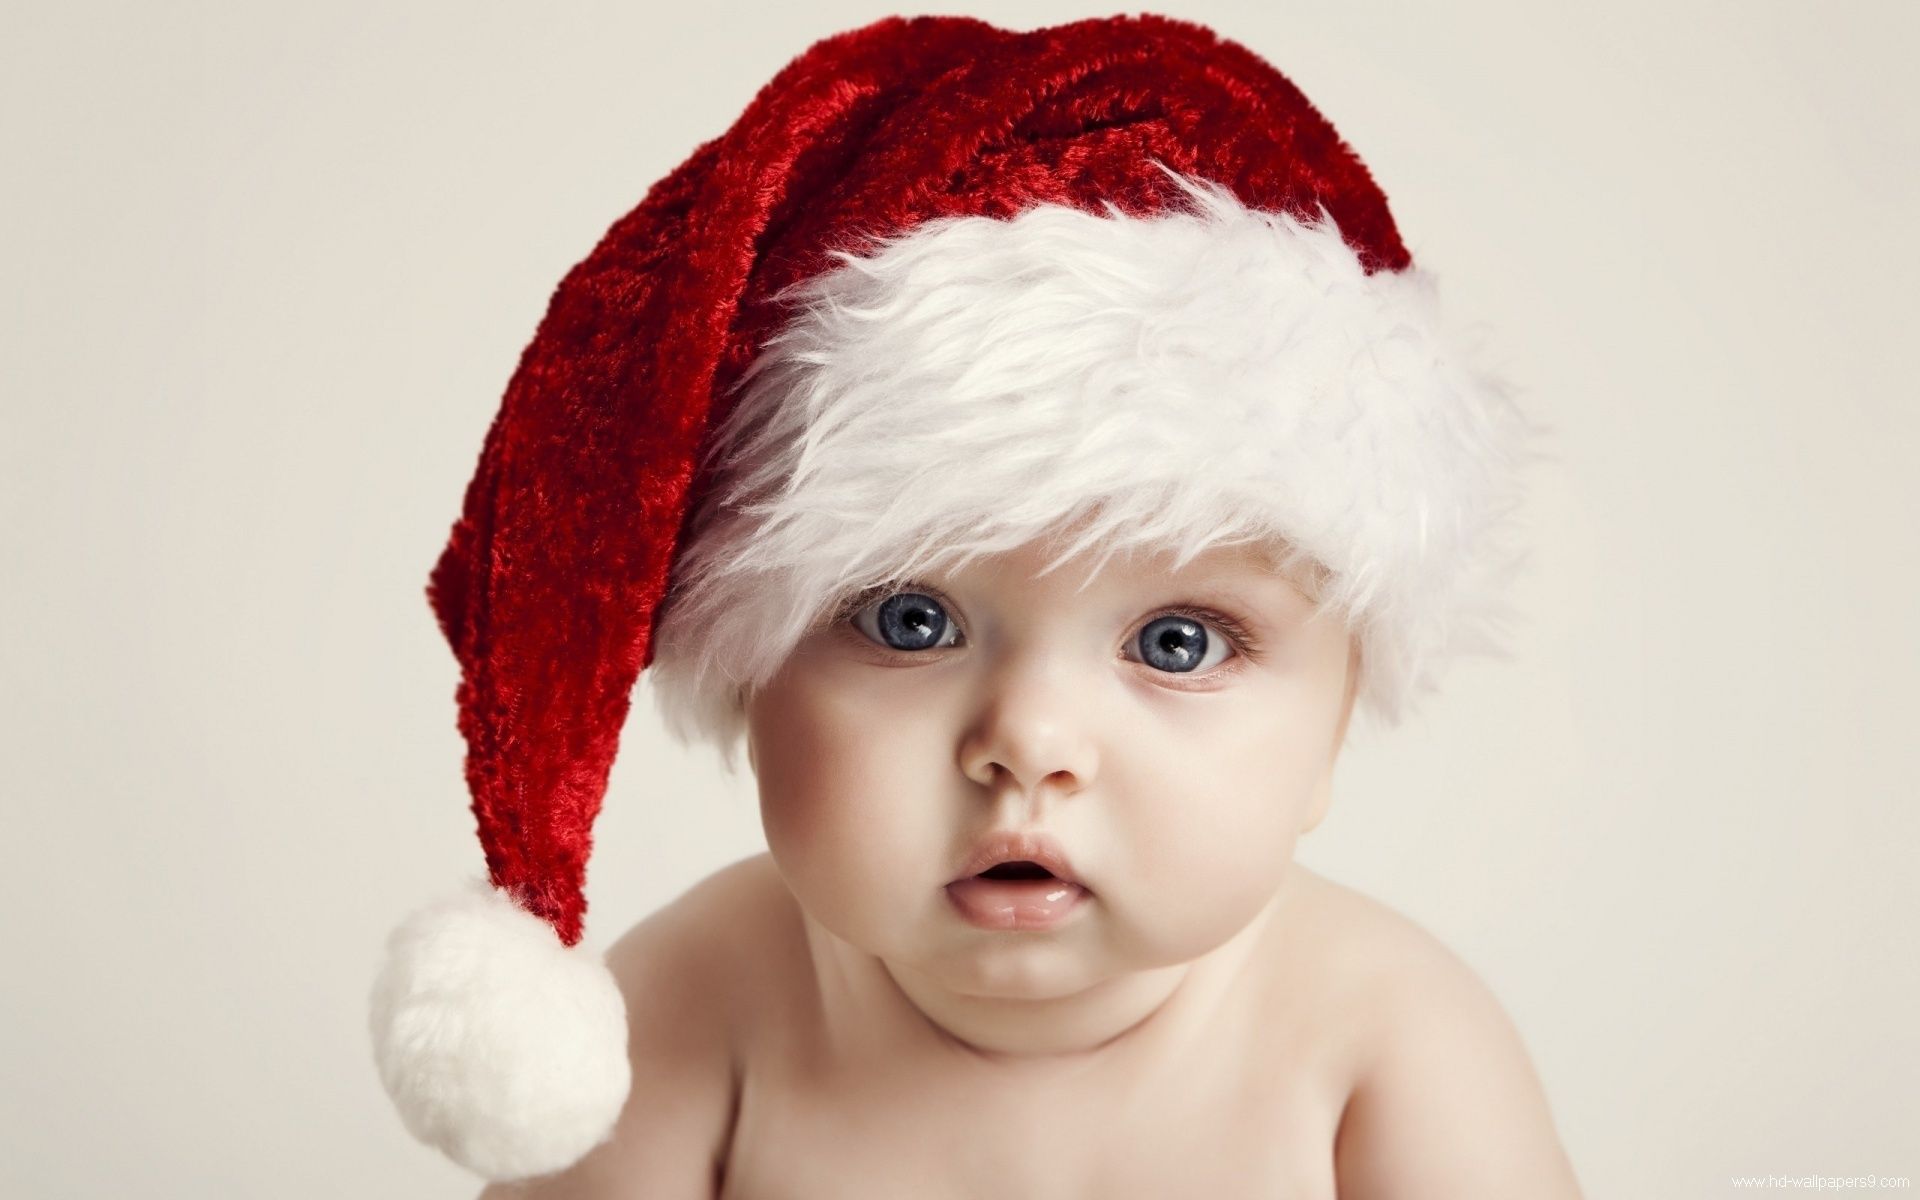 Cute Baby With Santa Claus Cap